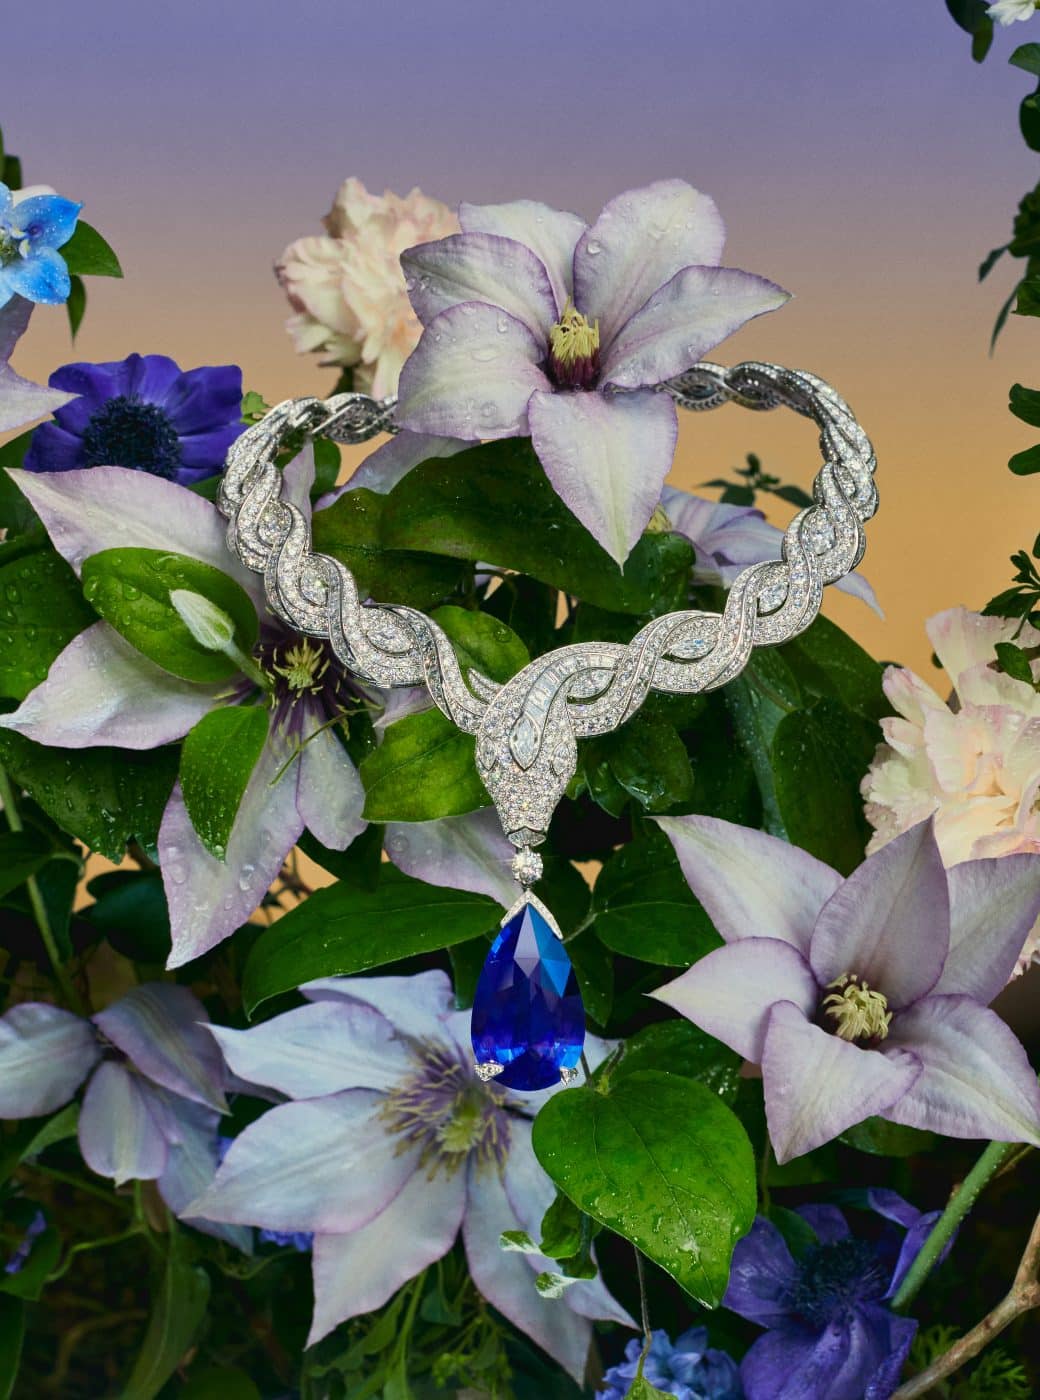 Bulgari Serpenti necklace as seen in Rizzoli book Bvlgari Eden: The Garden of Wonders